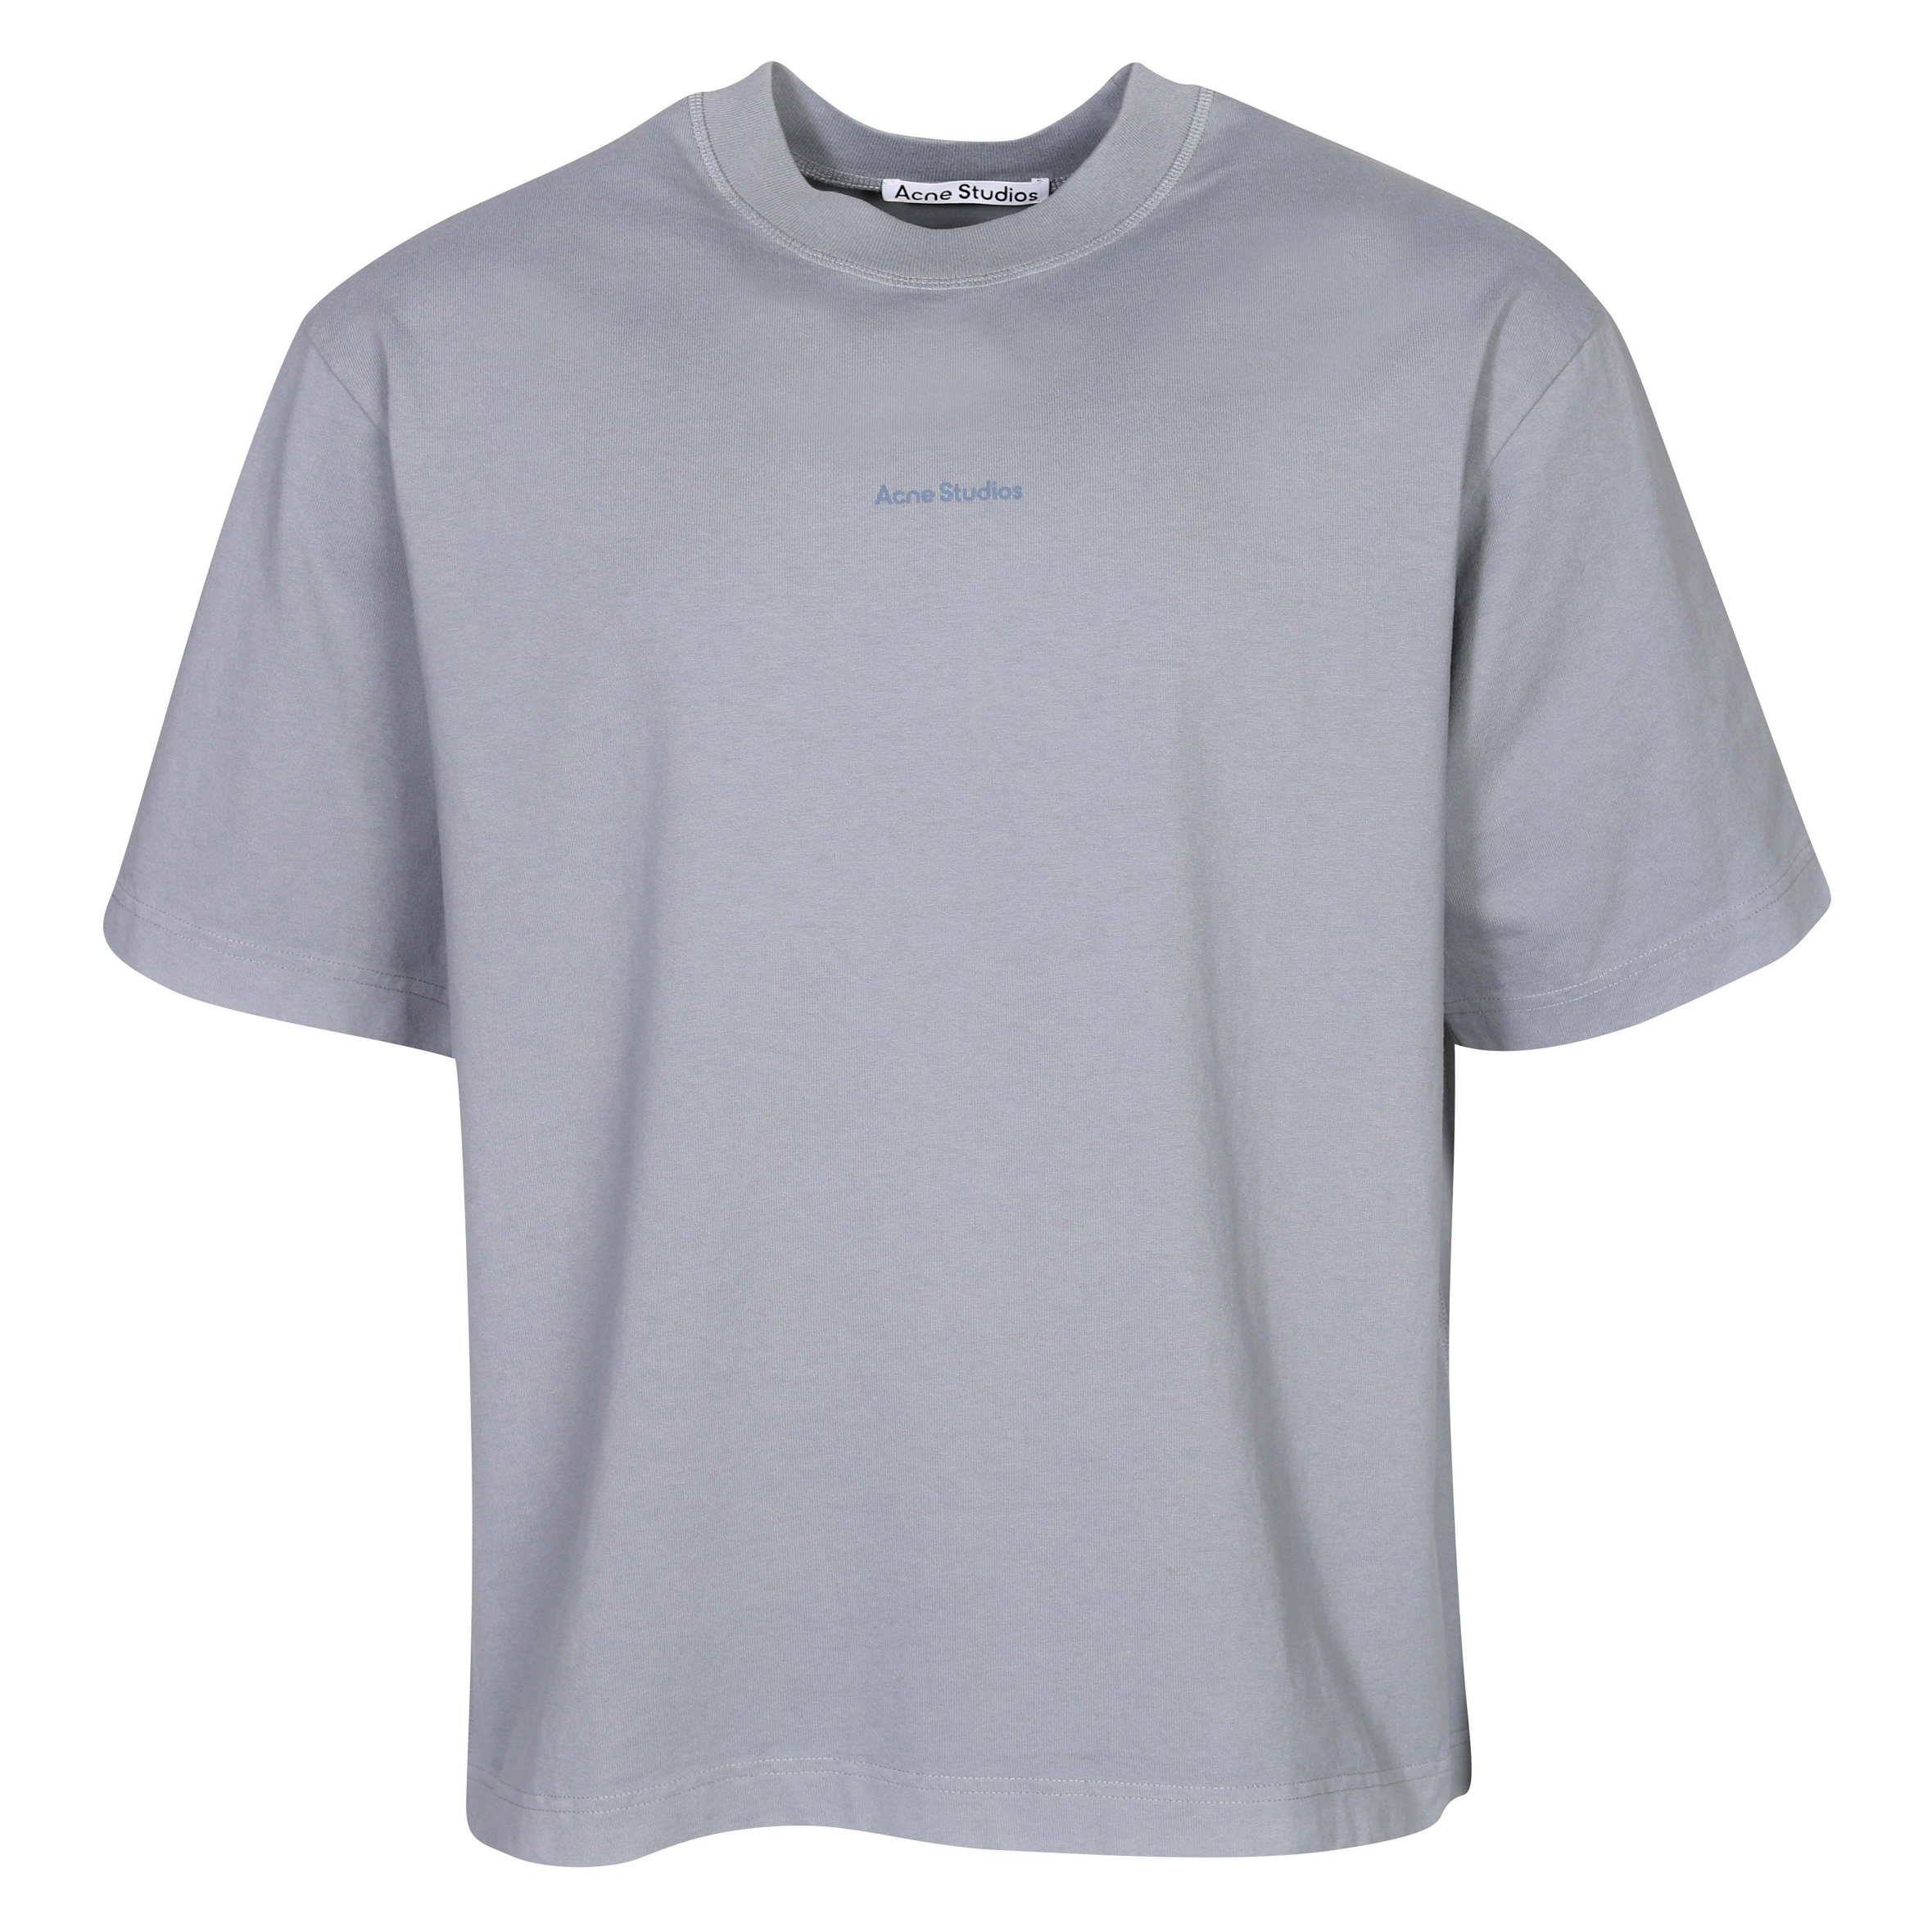 Acne Studios Stamp T-Shirt in Steel Grey S